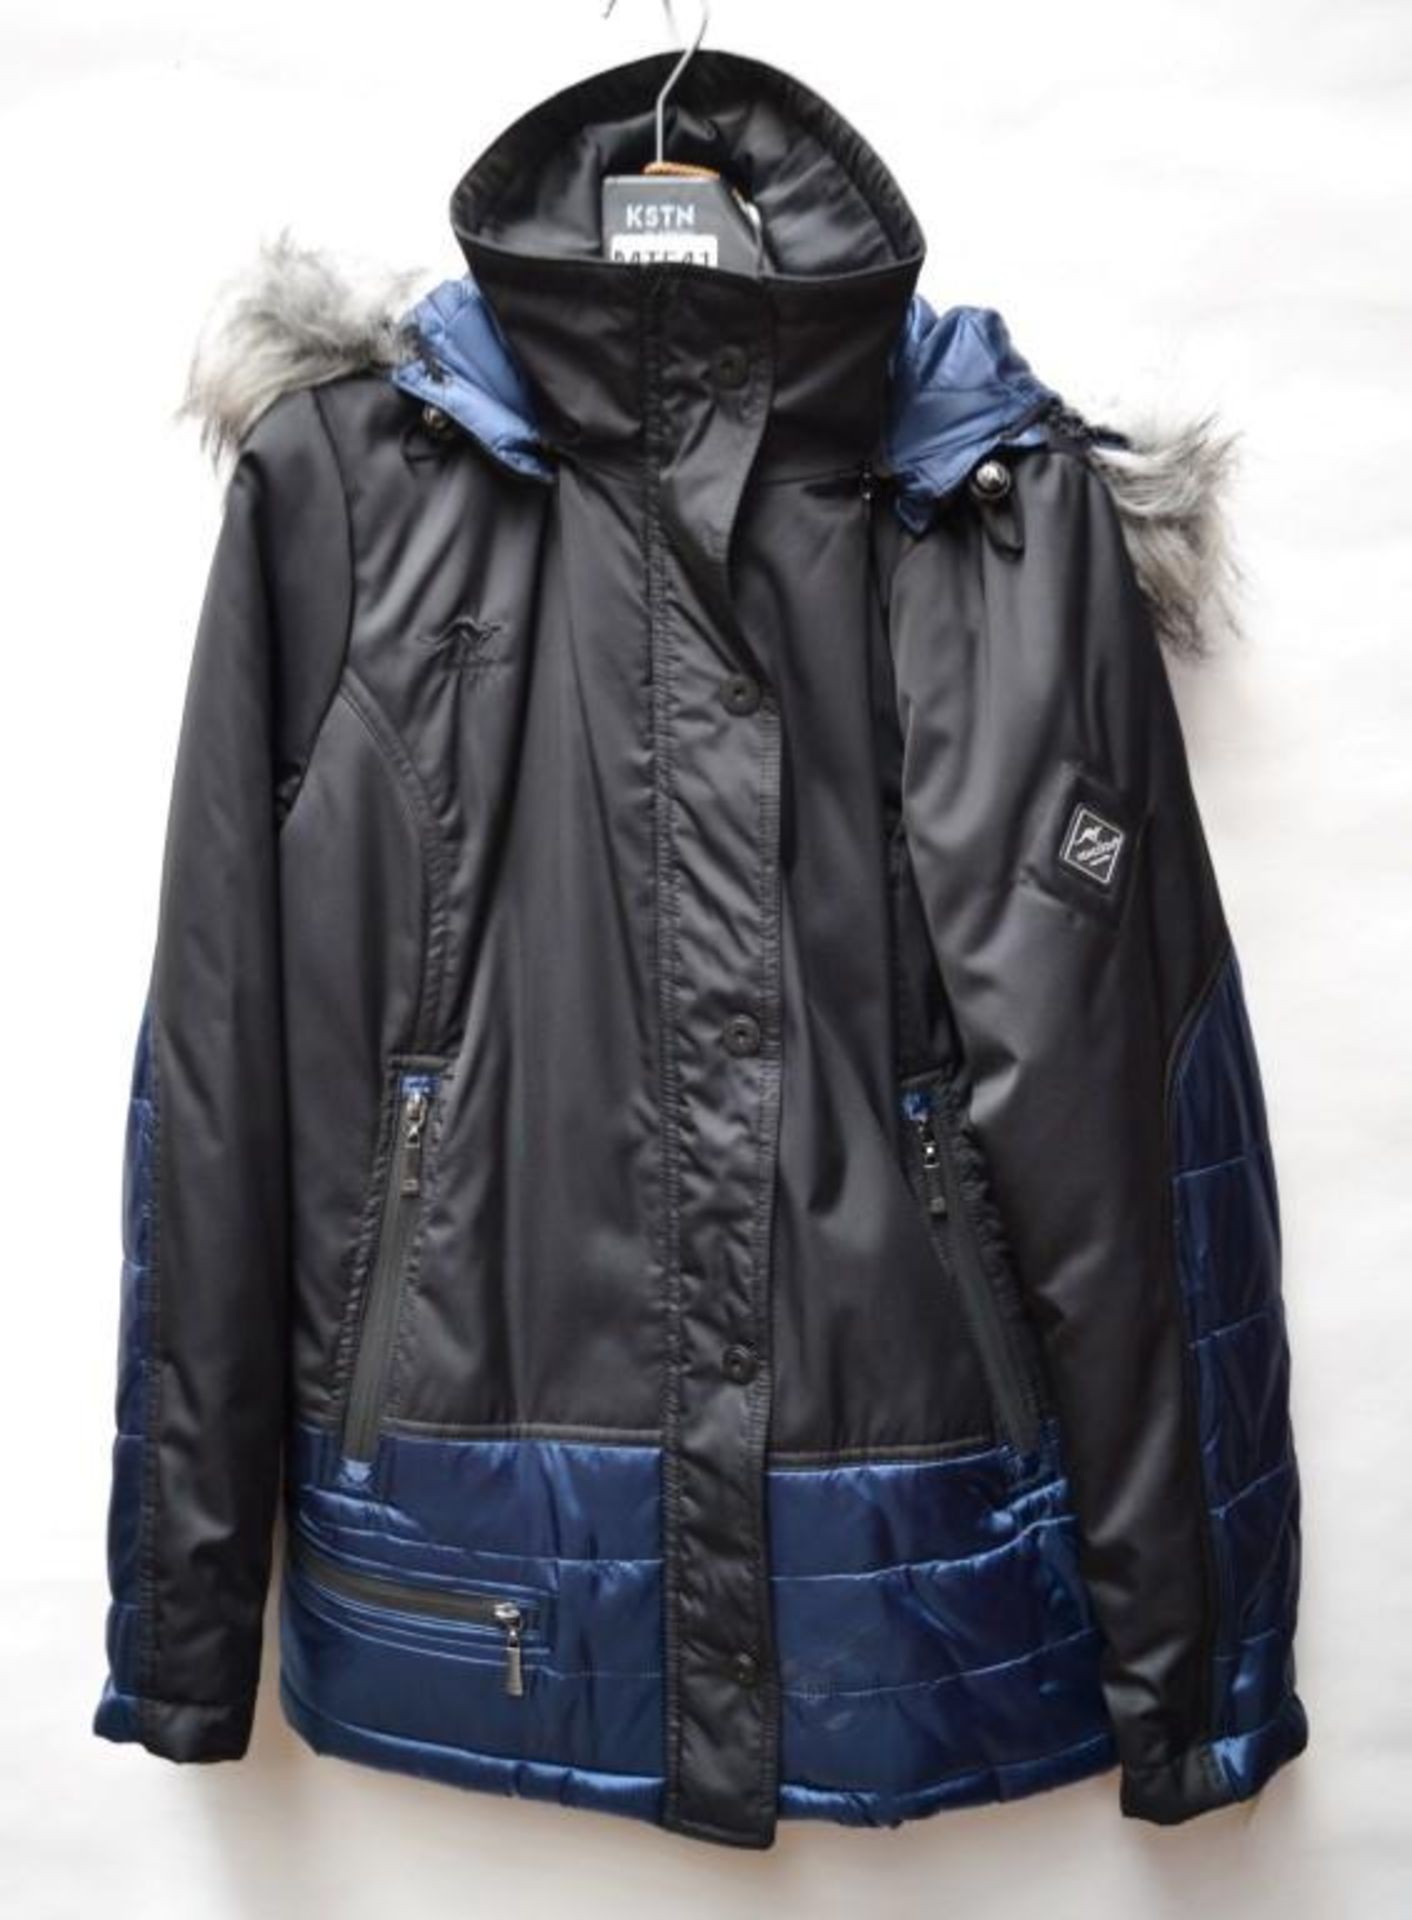 1 x Premium Branded Womens Winter Coat - Wind Proof & Water Resistant - Colour: Black / Electric Blu